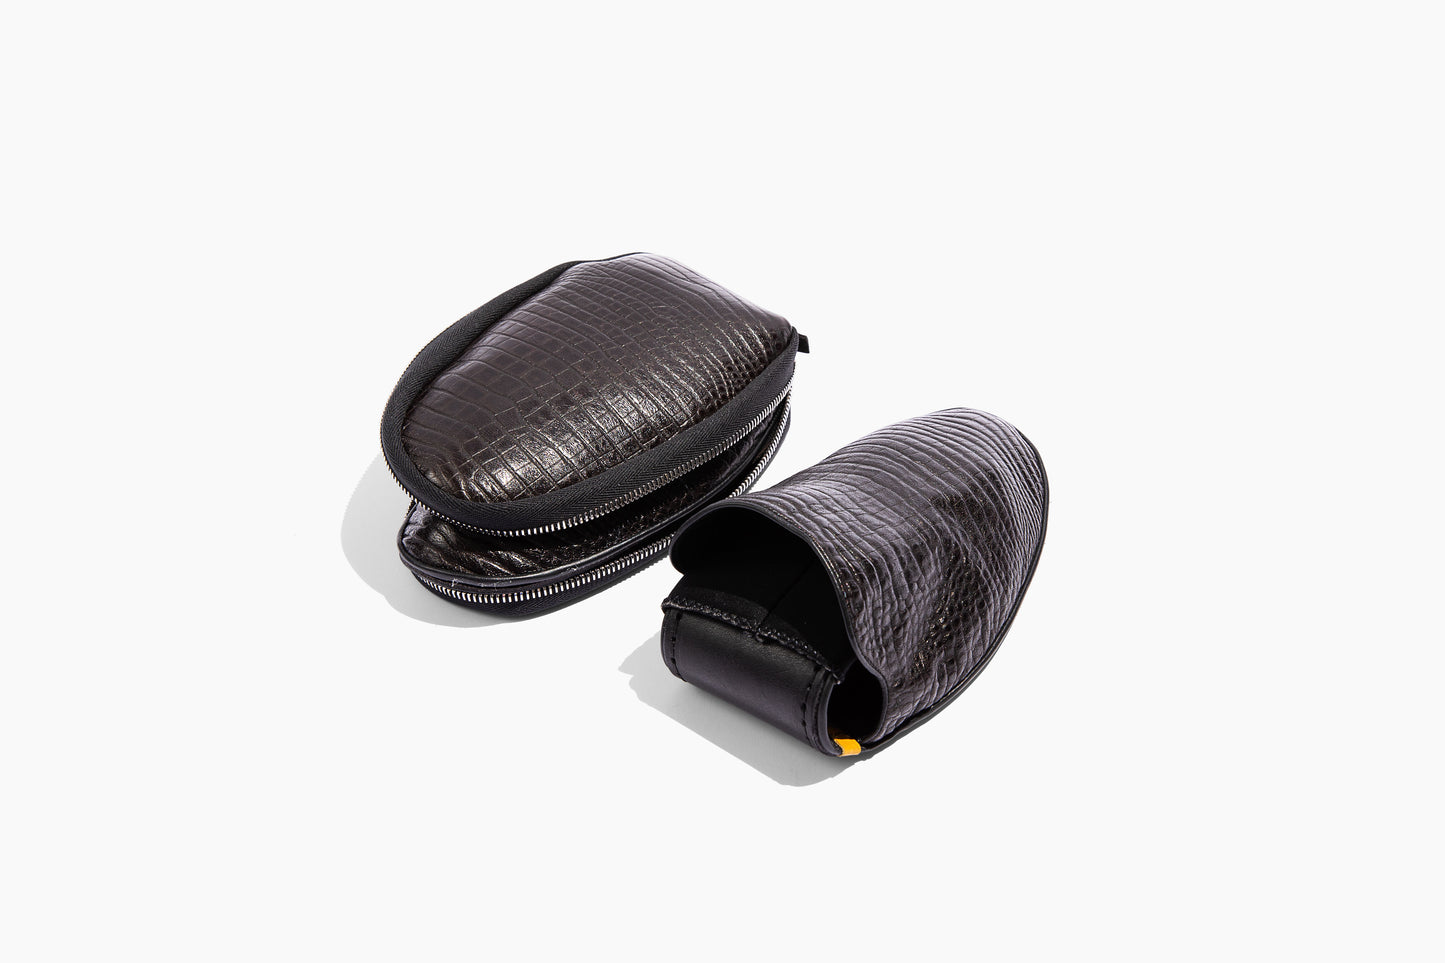 Luxury crocodile embossed leather. Foldable travel slipper. Handmade in Italy.